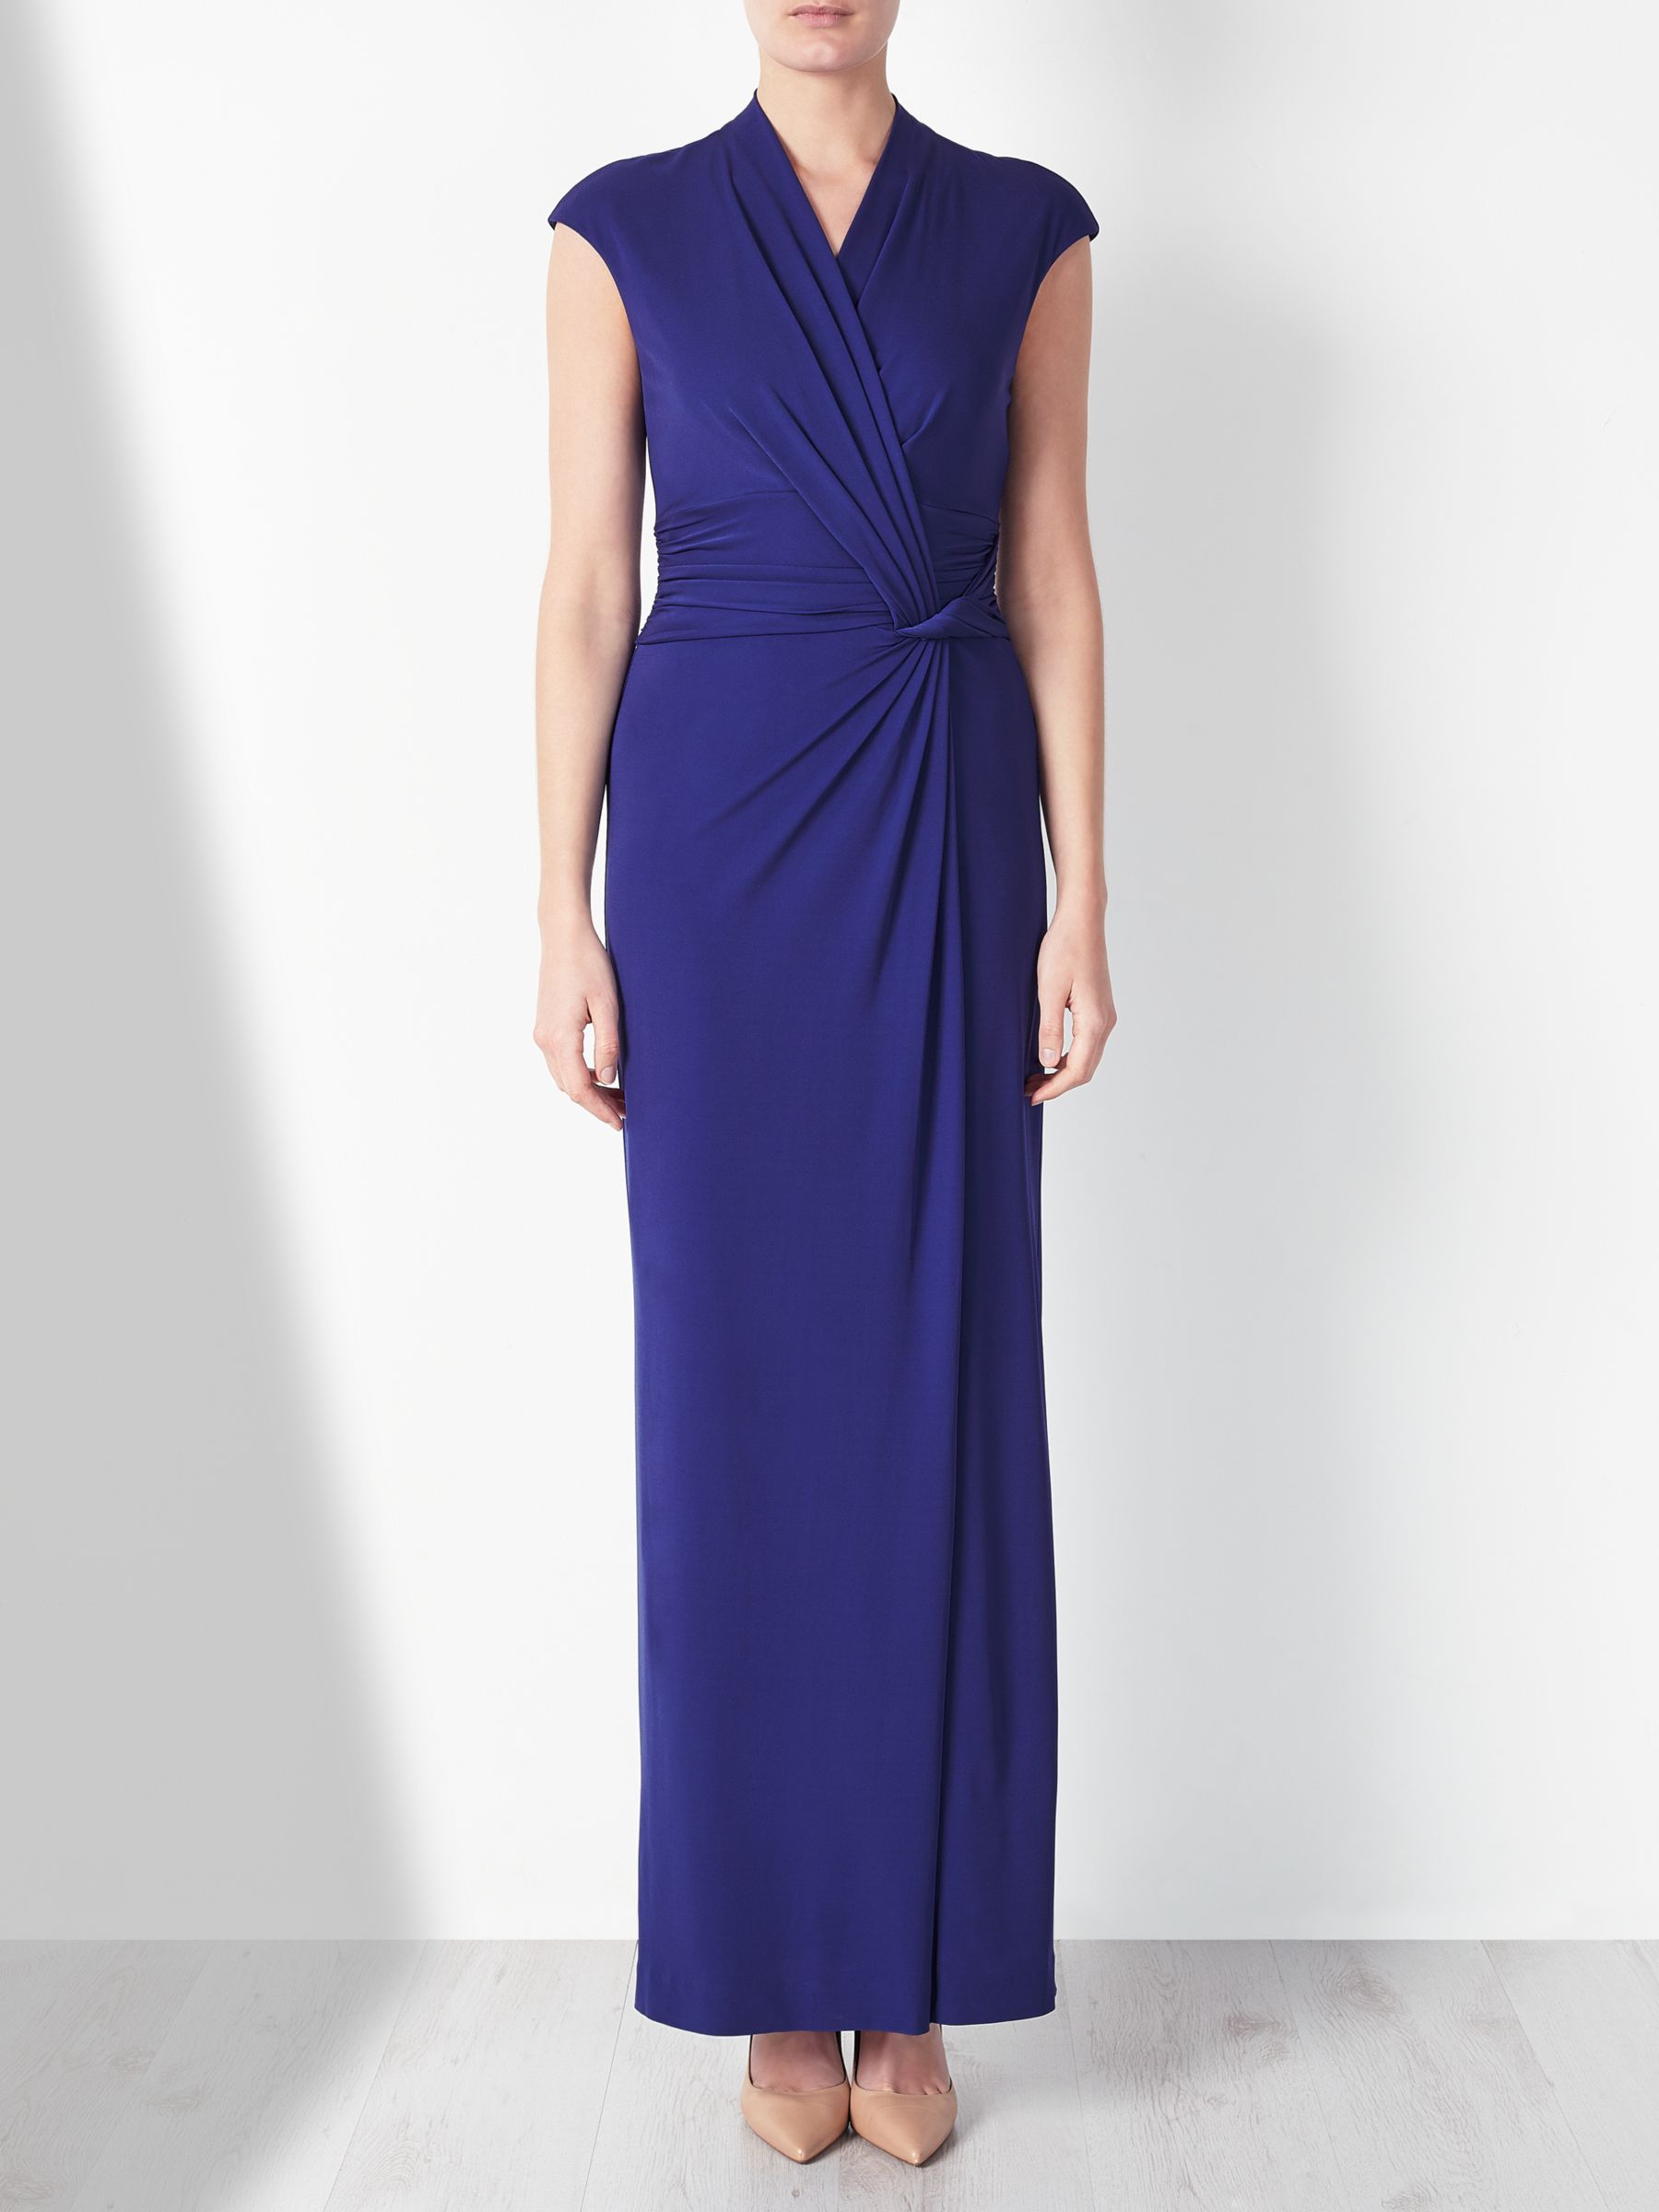 John Lewis & Partners Draped Twist Waist Dress, Blue, 10